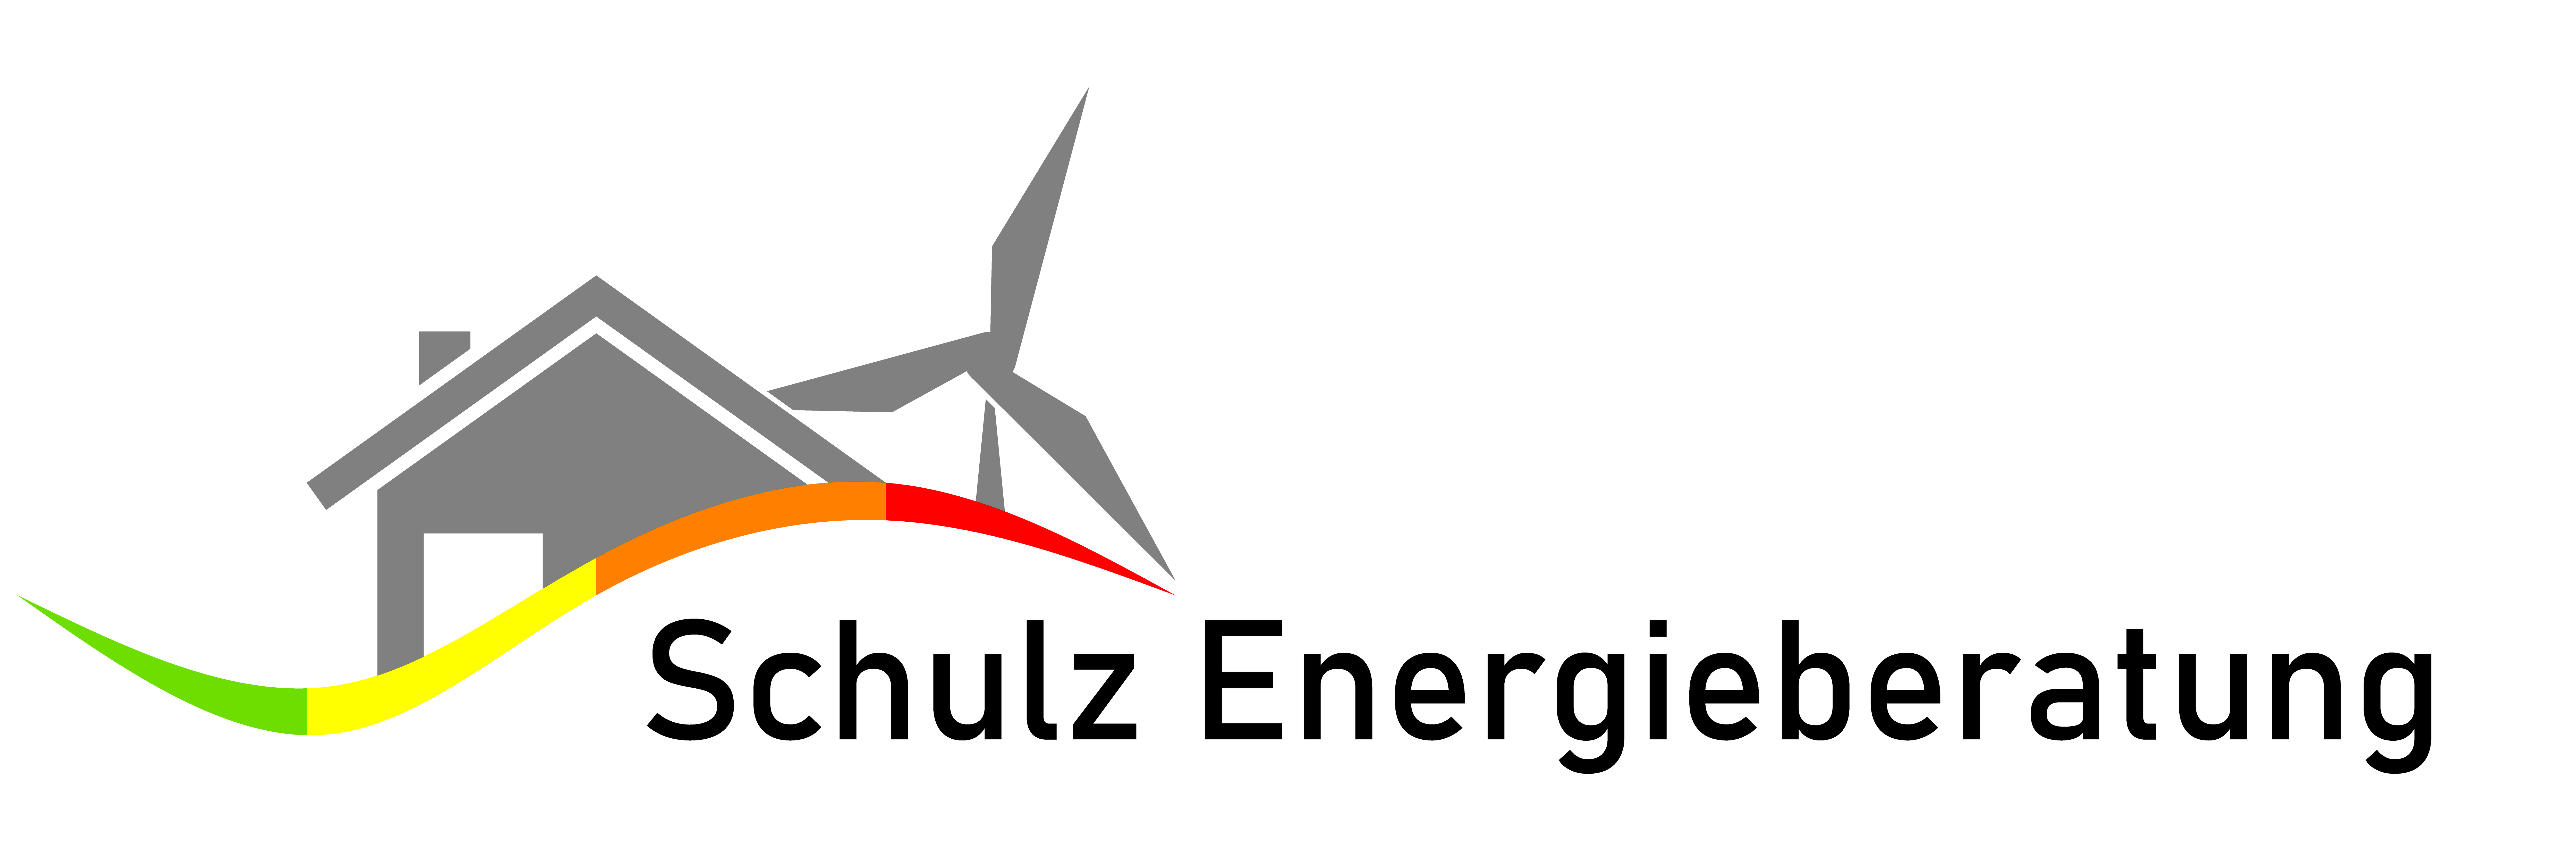 Schulz Energieberatung